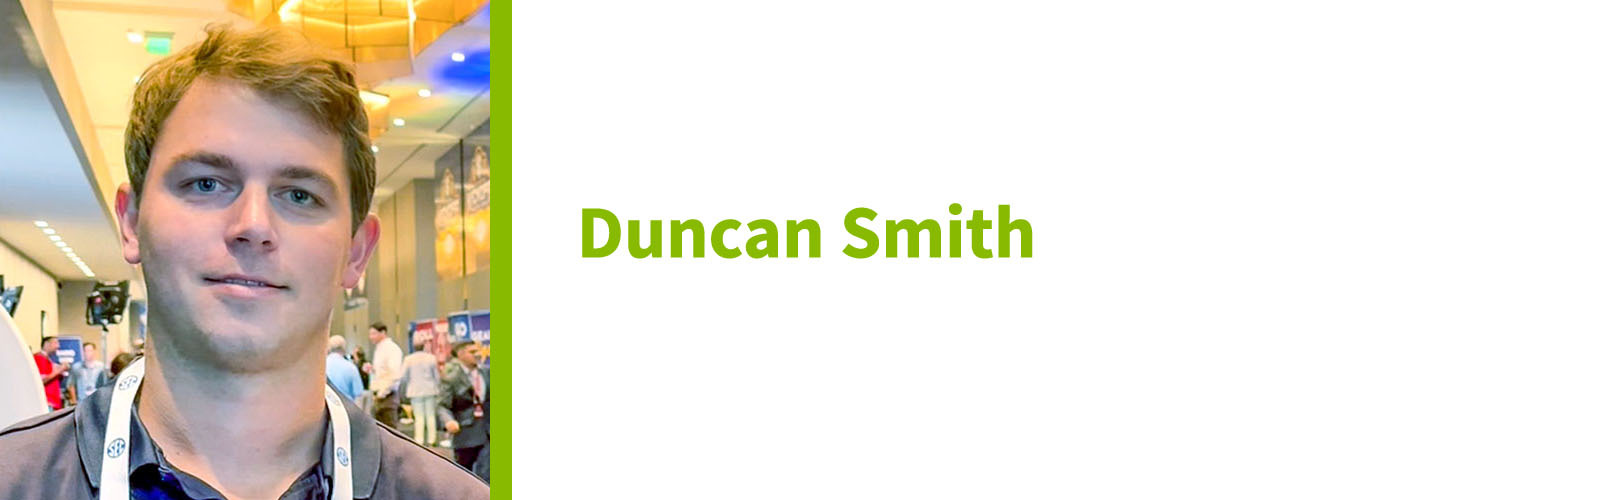 Duncan Smith